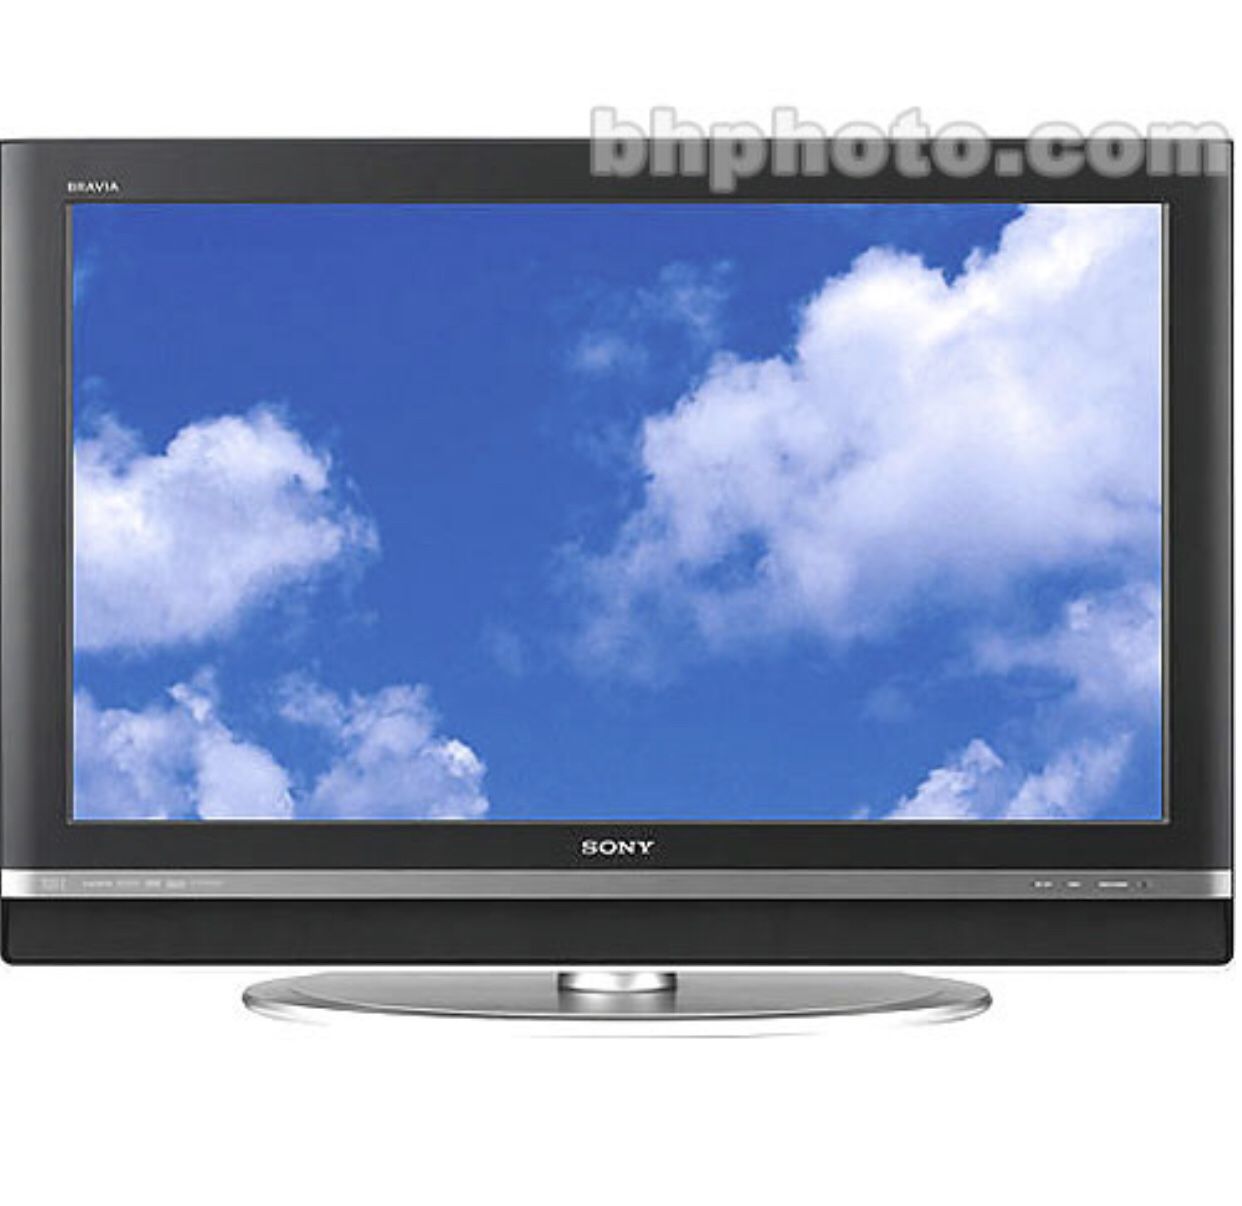 $60 SONY BRAVIA 40 inch LCD TV XBR HDTV